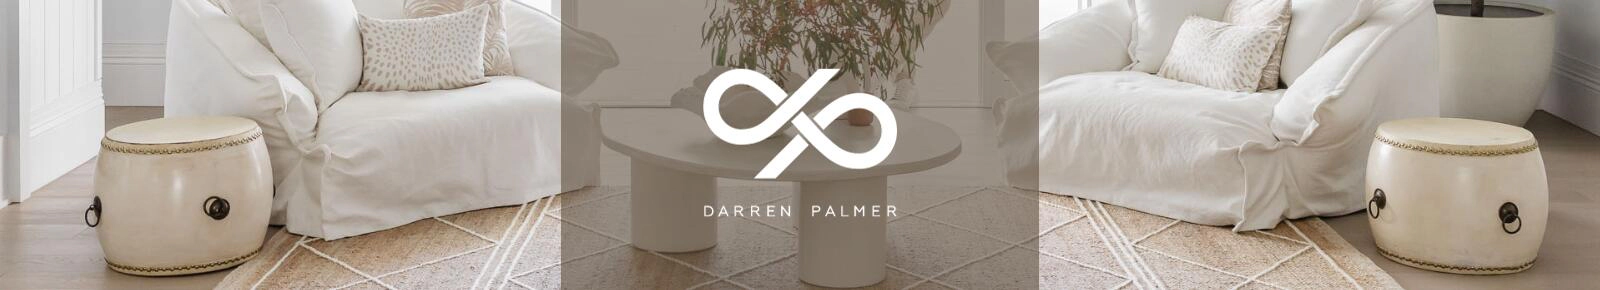 Darren Palmer